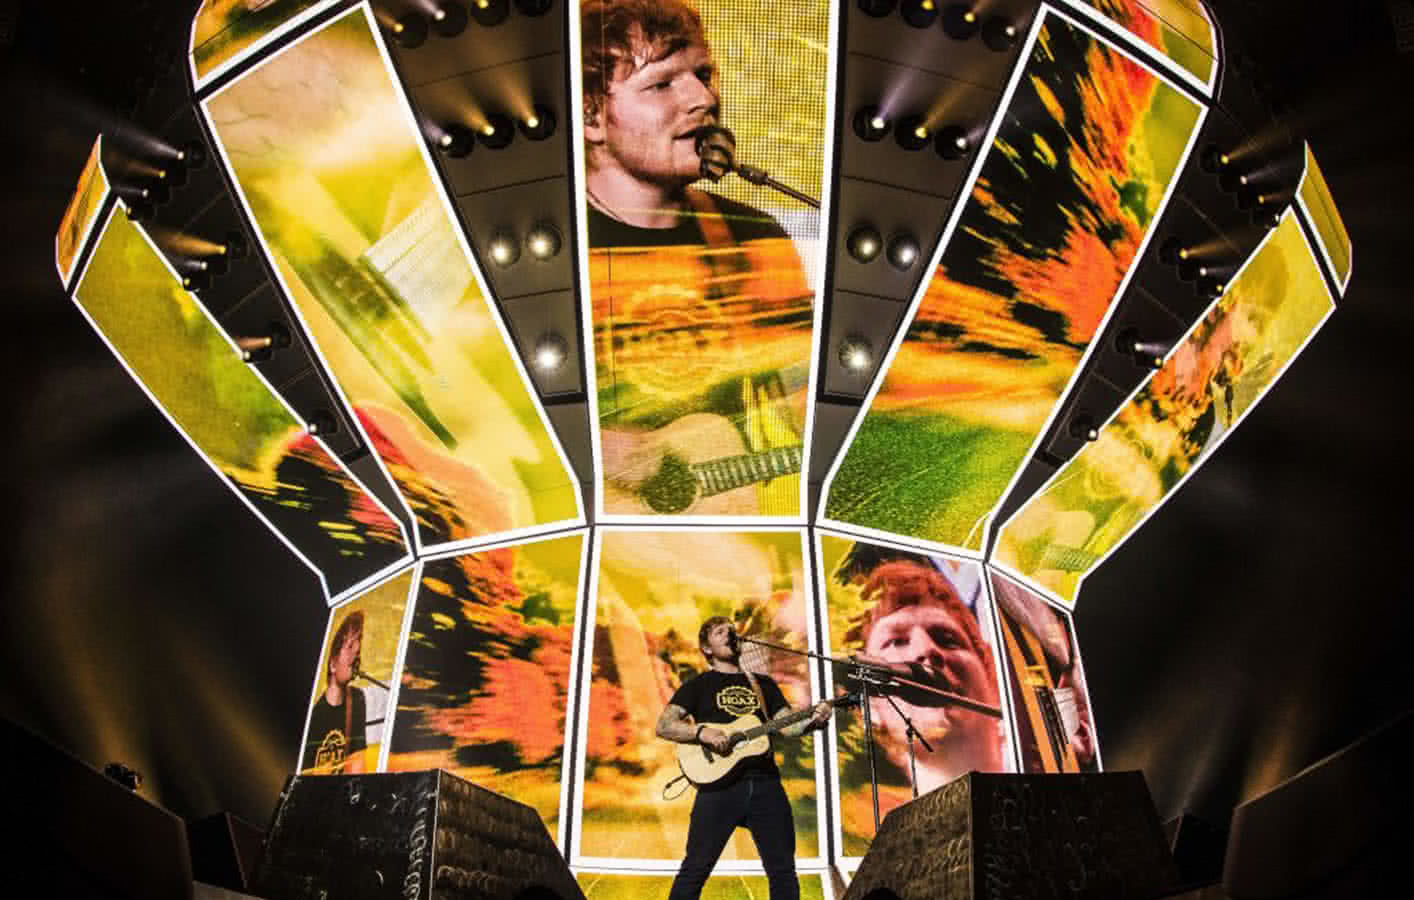 Ed Sheeran’s ÷ Tour